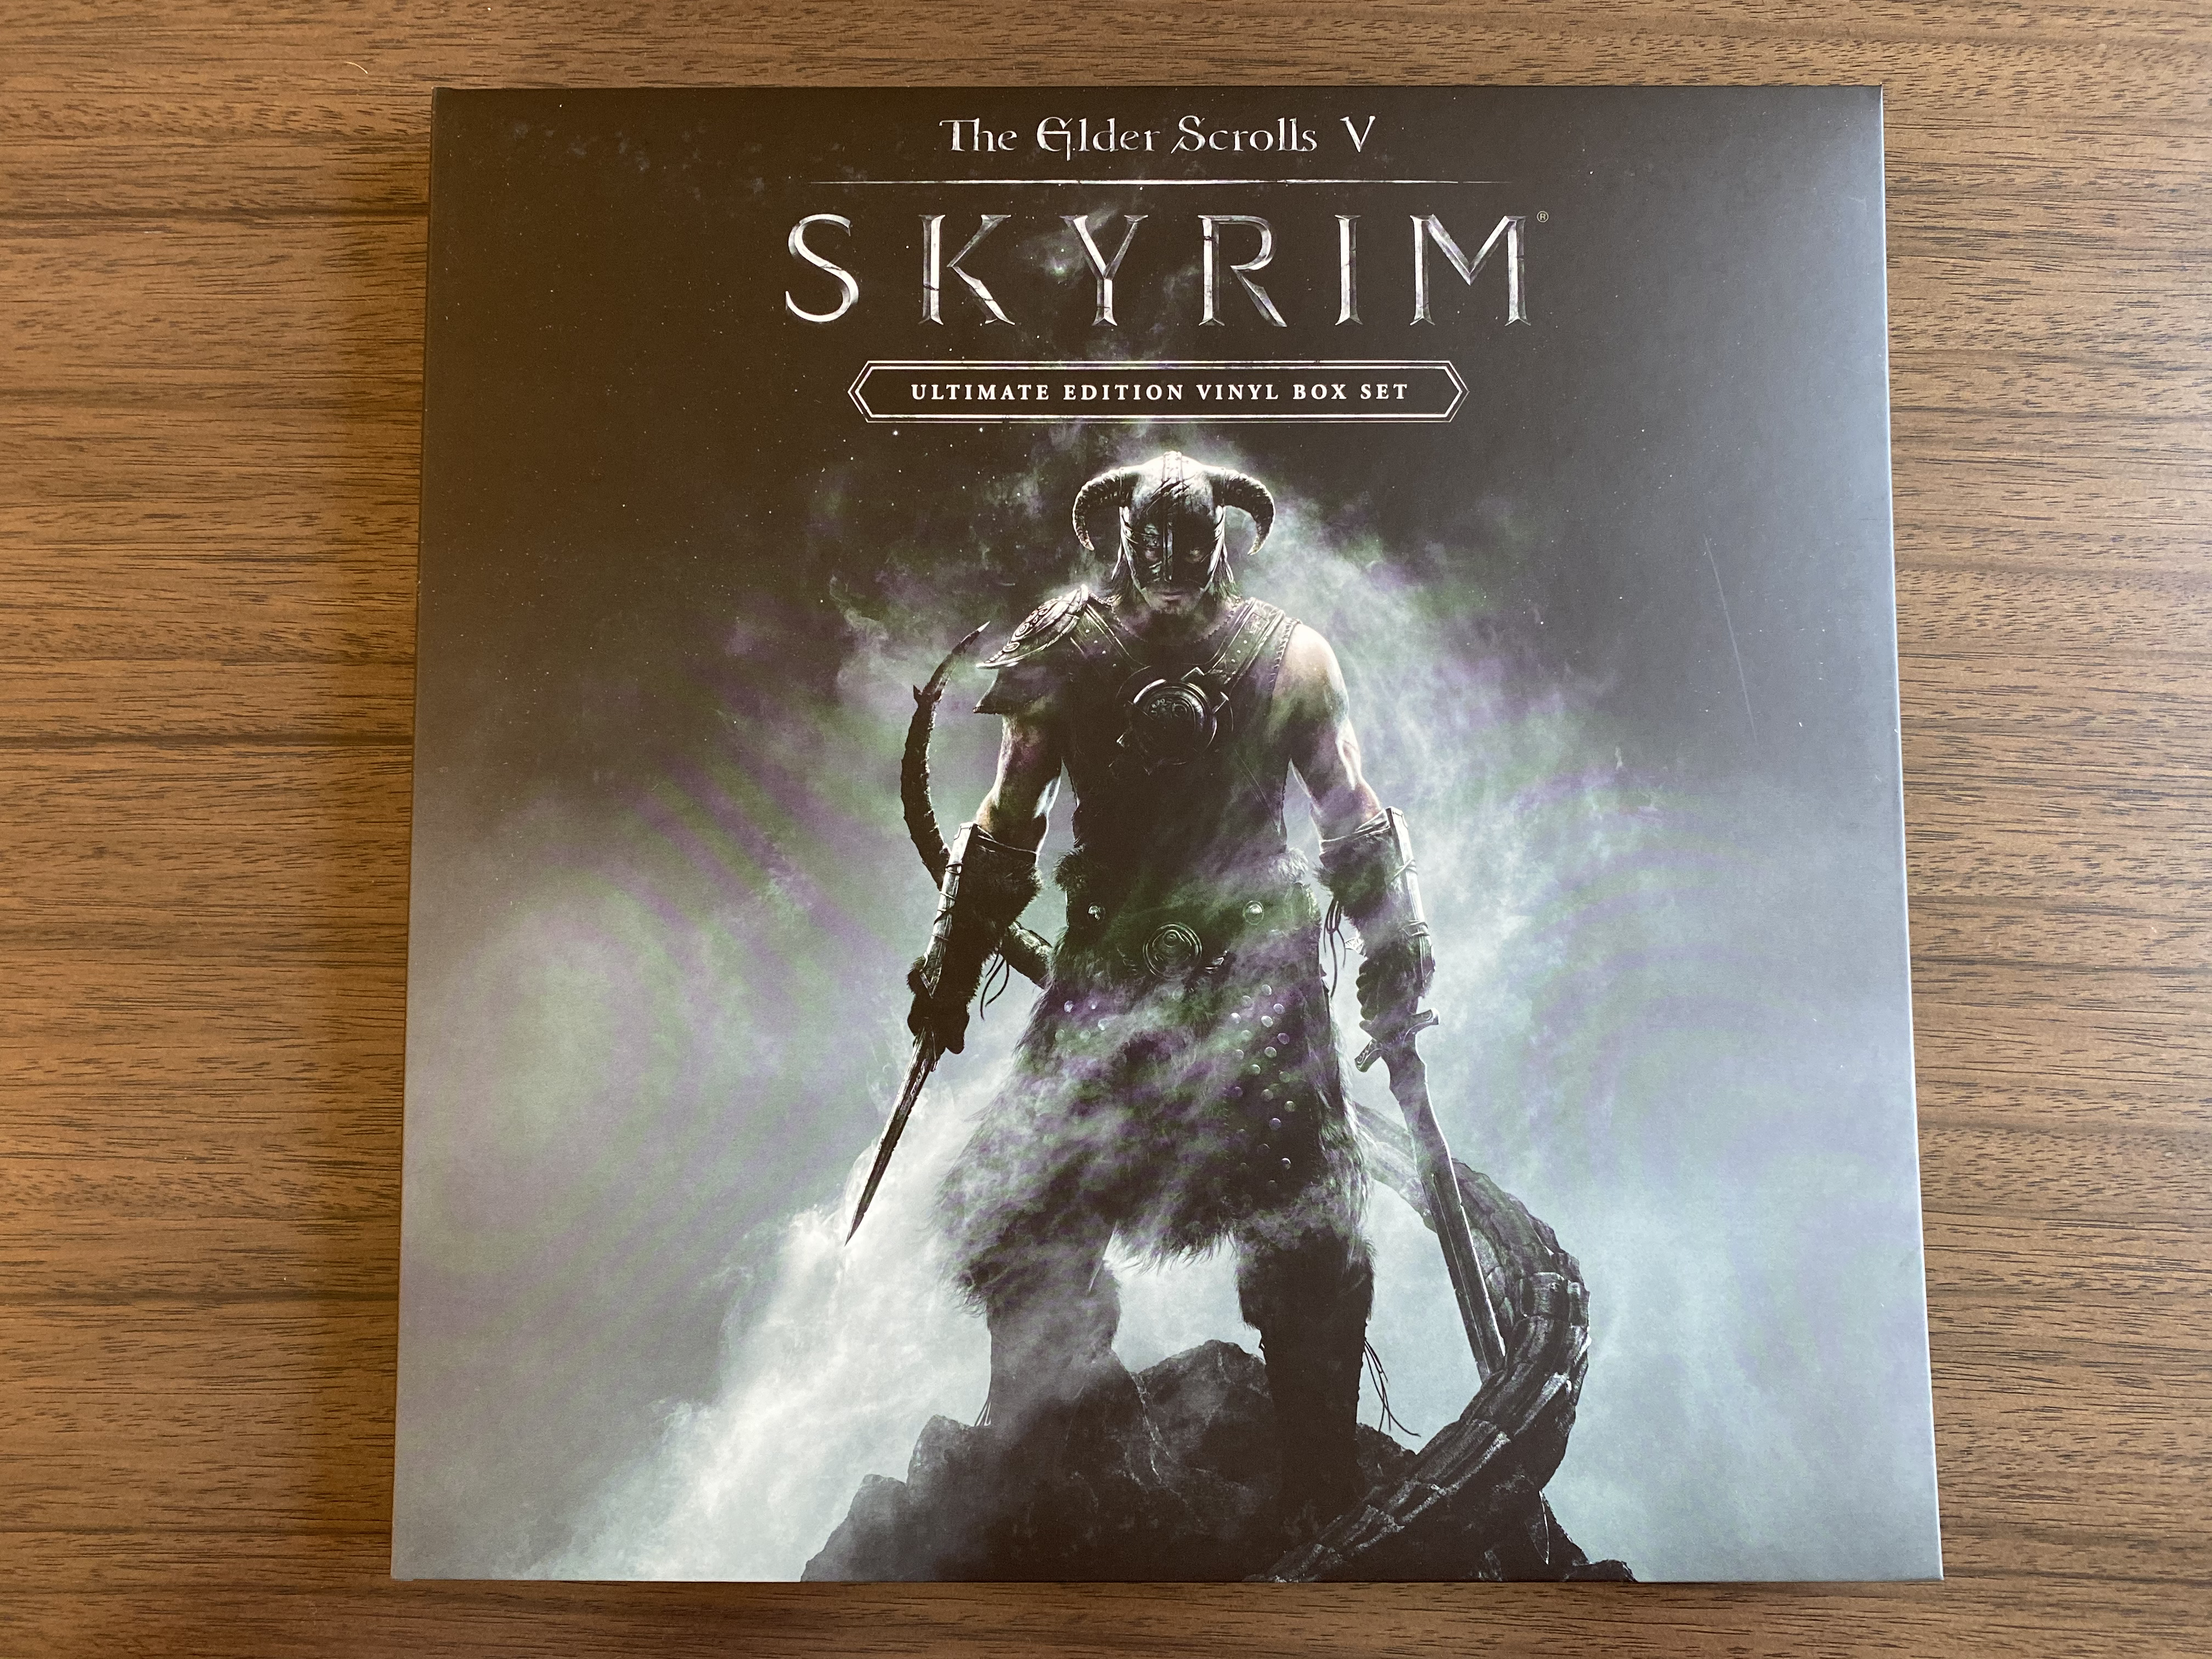 Kennon-Green Elder Scrolls V Skyrim Ultimate Edition Vinyl Box Set Sweet Roll Comic Con Limited LP - Inside Box